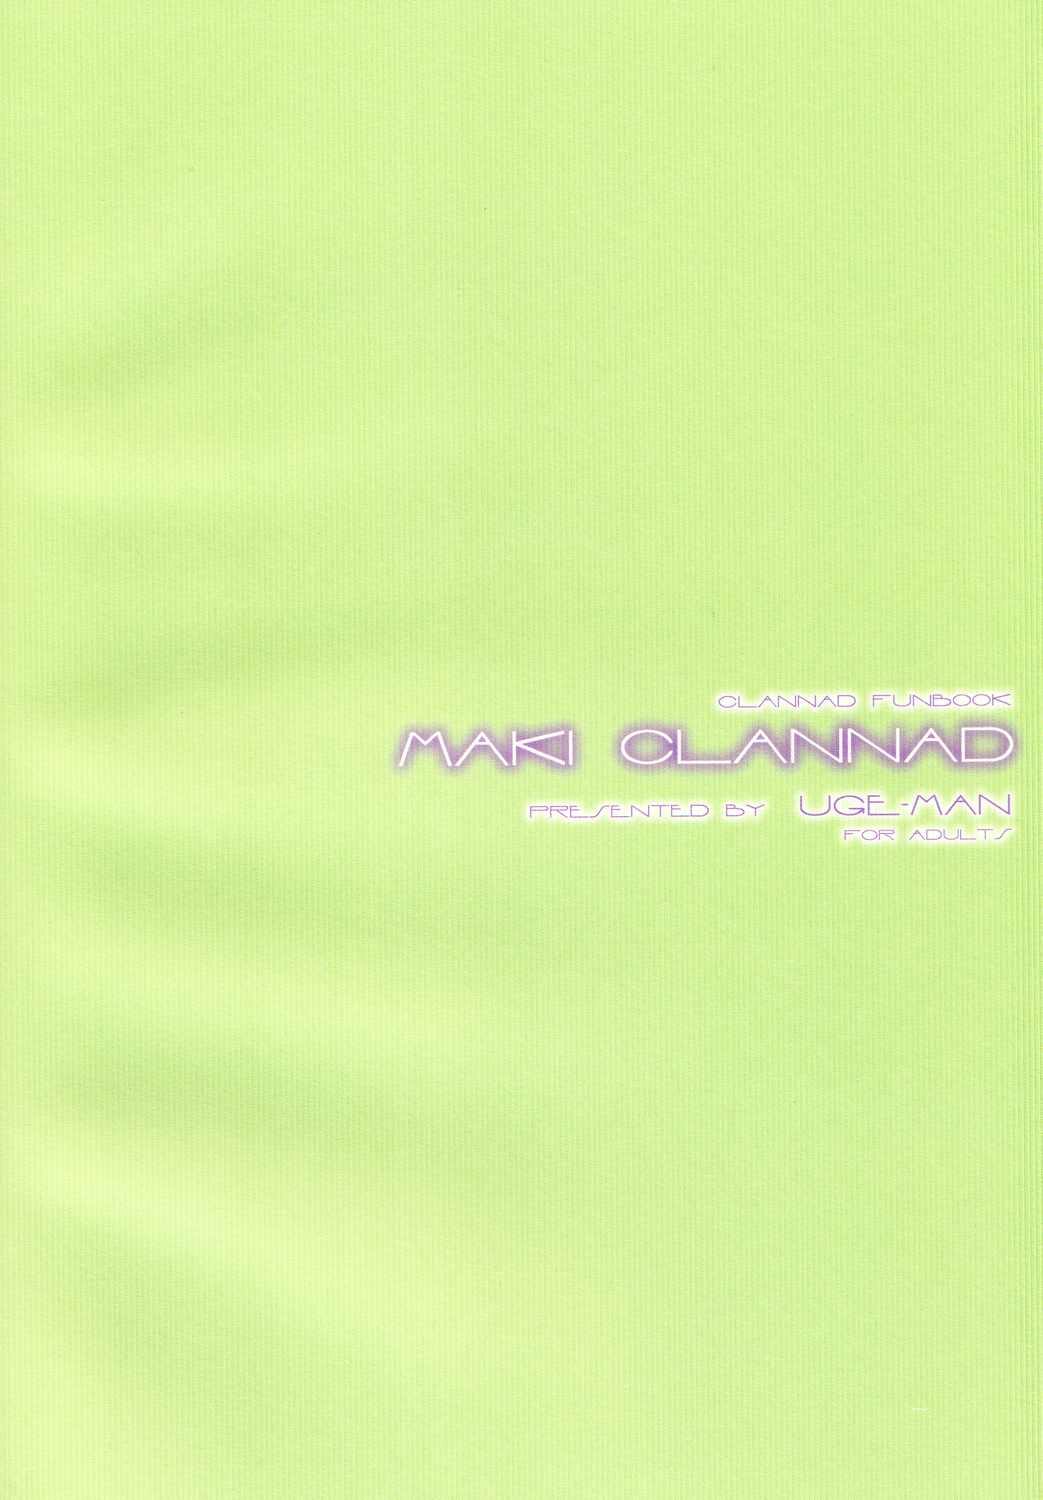 Maki Clannad 25